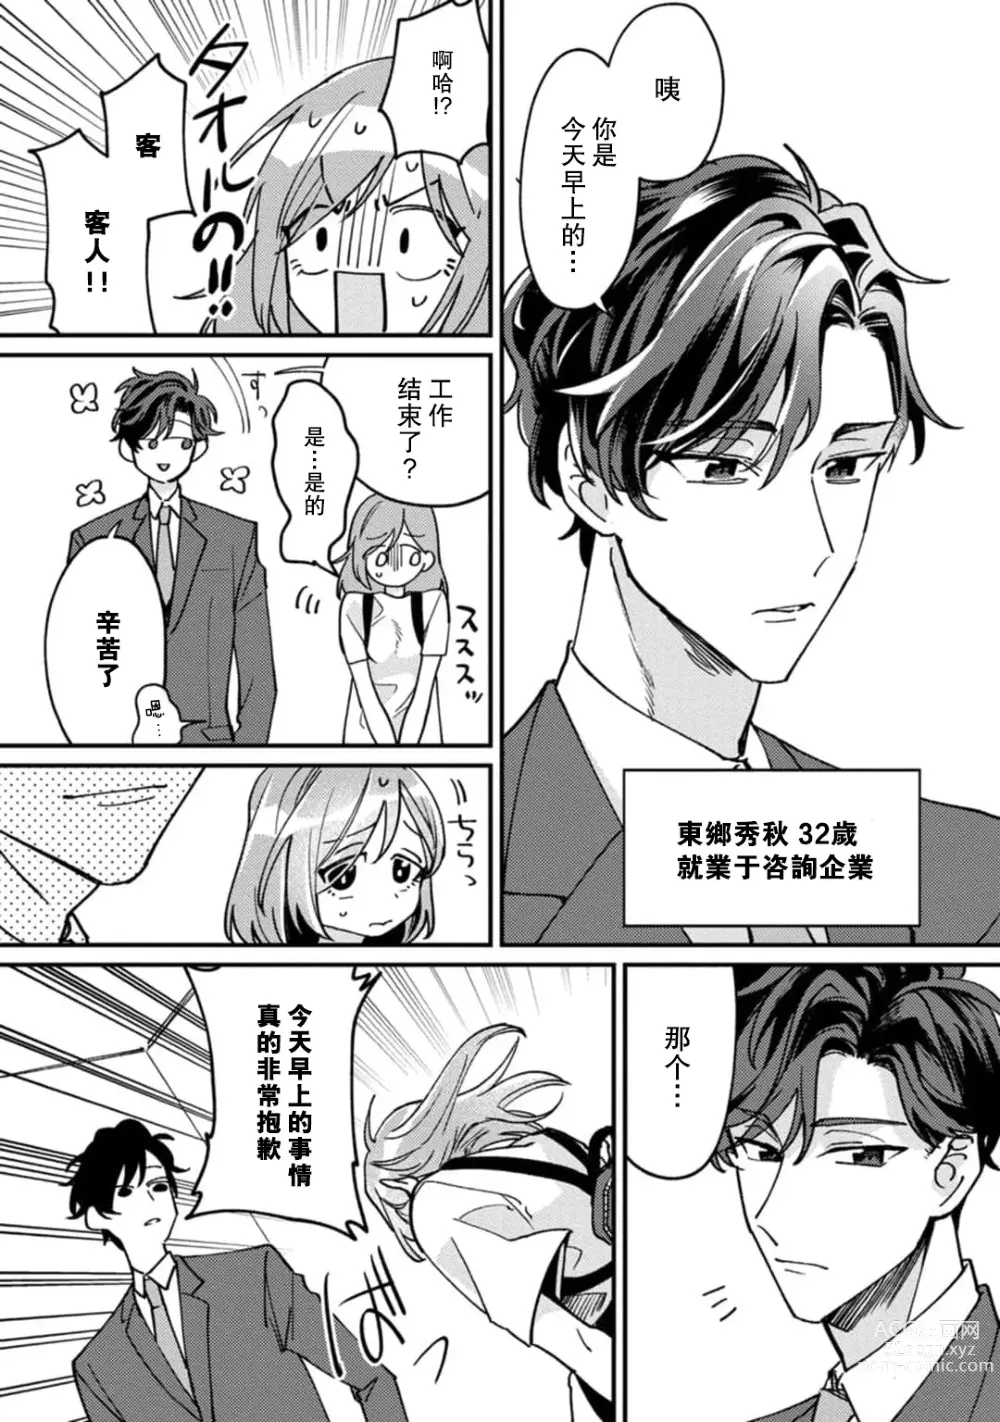 Page 10 of manga 请勿打扰！酒店客房服务员被常客绅士夺走第一次 1-3